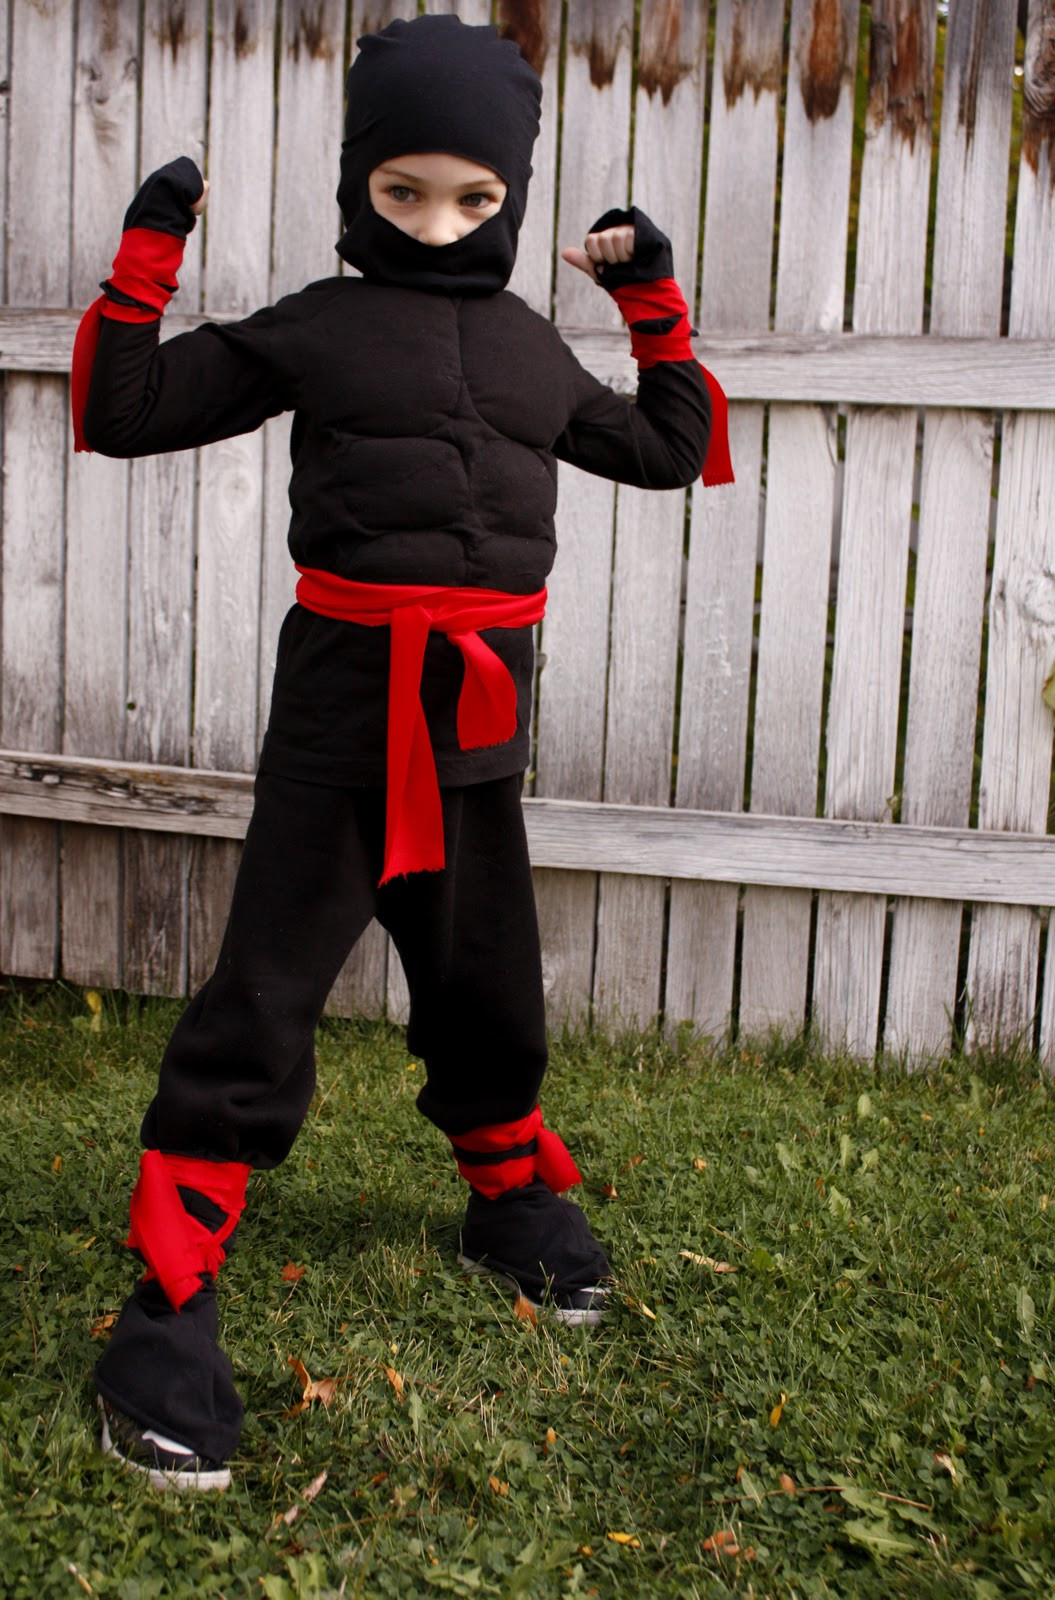 Best ideas about Ninja DIY Costume
. Save or Pin ninja costume Now.